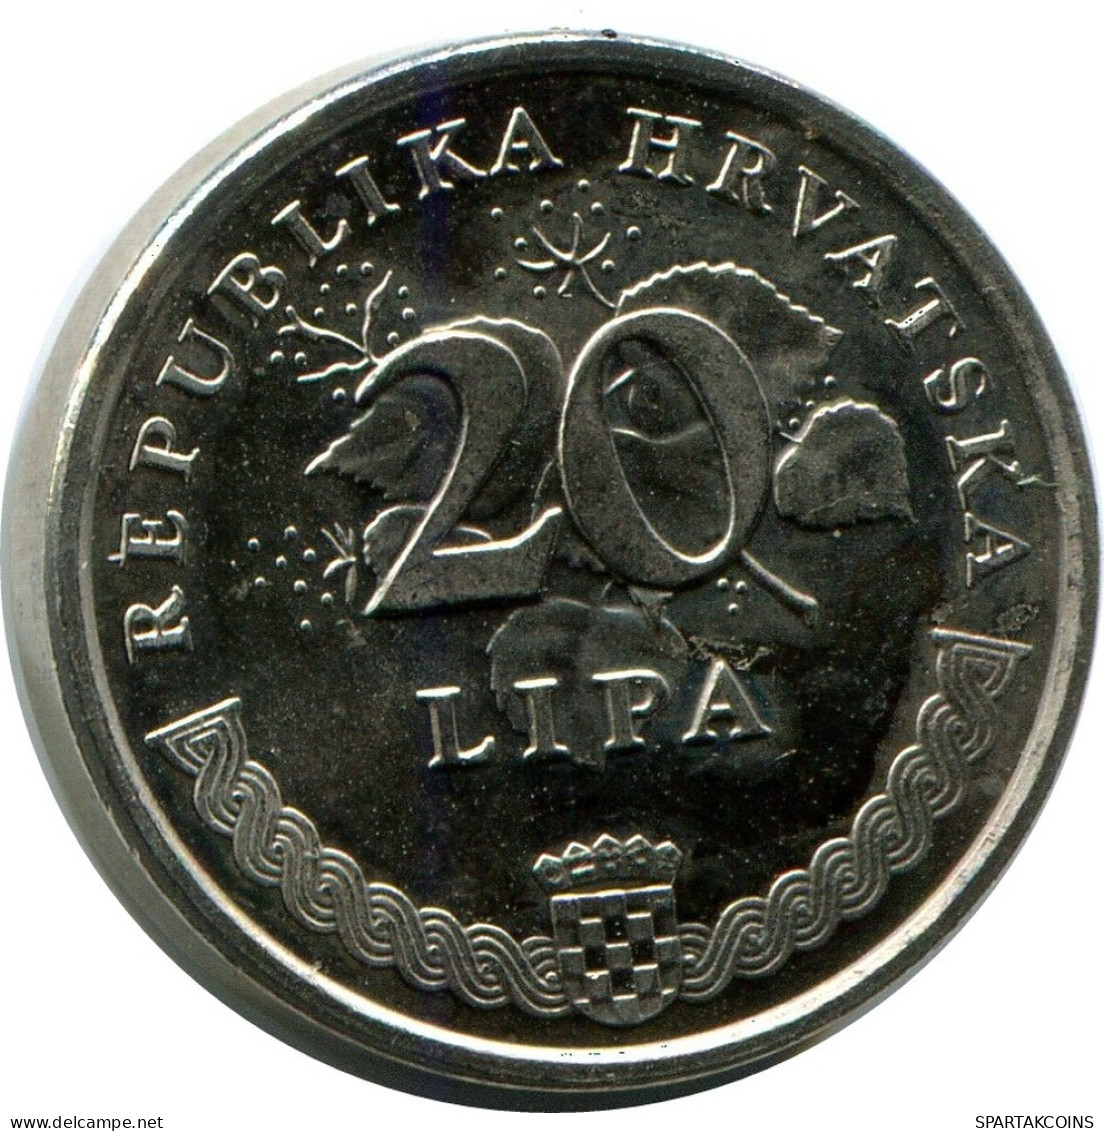 20 LIPA 1995 CROATIA Coin #AR930.U.A - Croatia